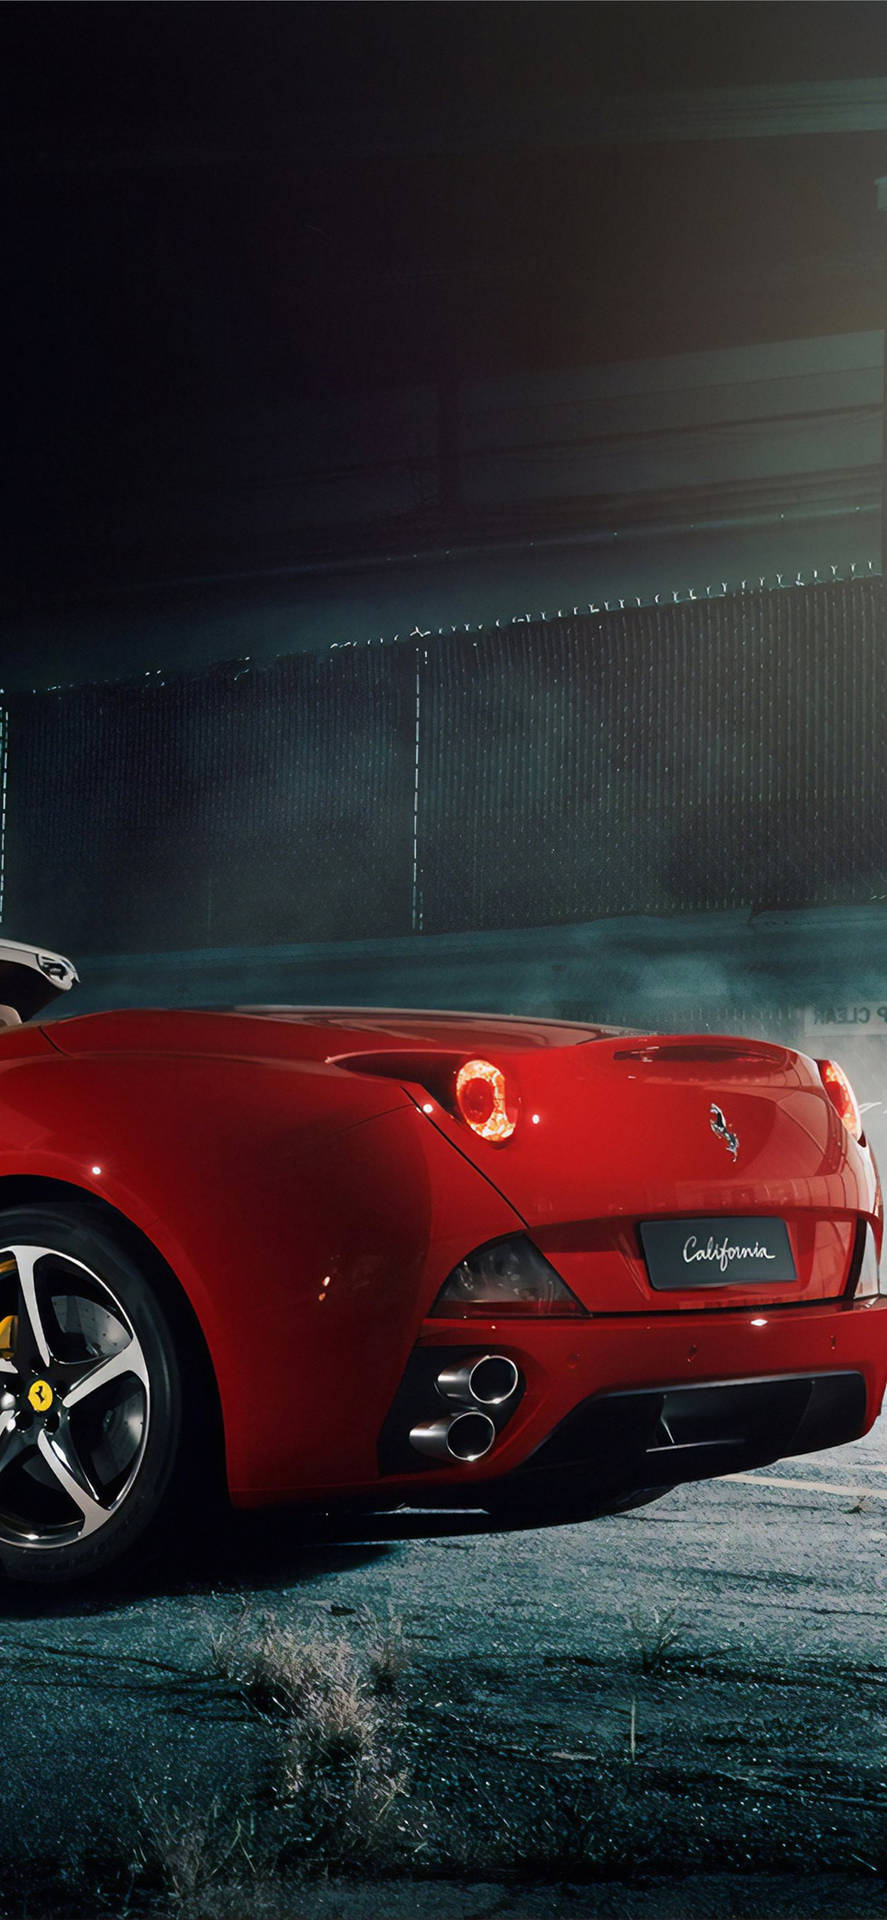 Automóvildeportivo California Ferrari En El Teléfono Fondo de pantalla